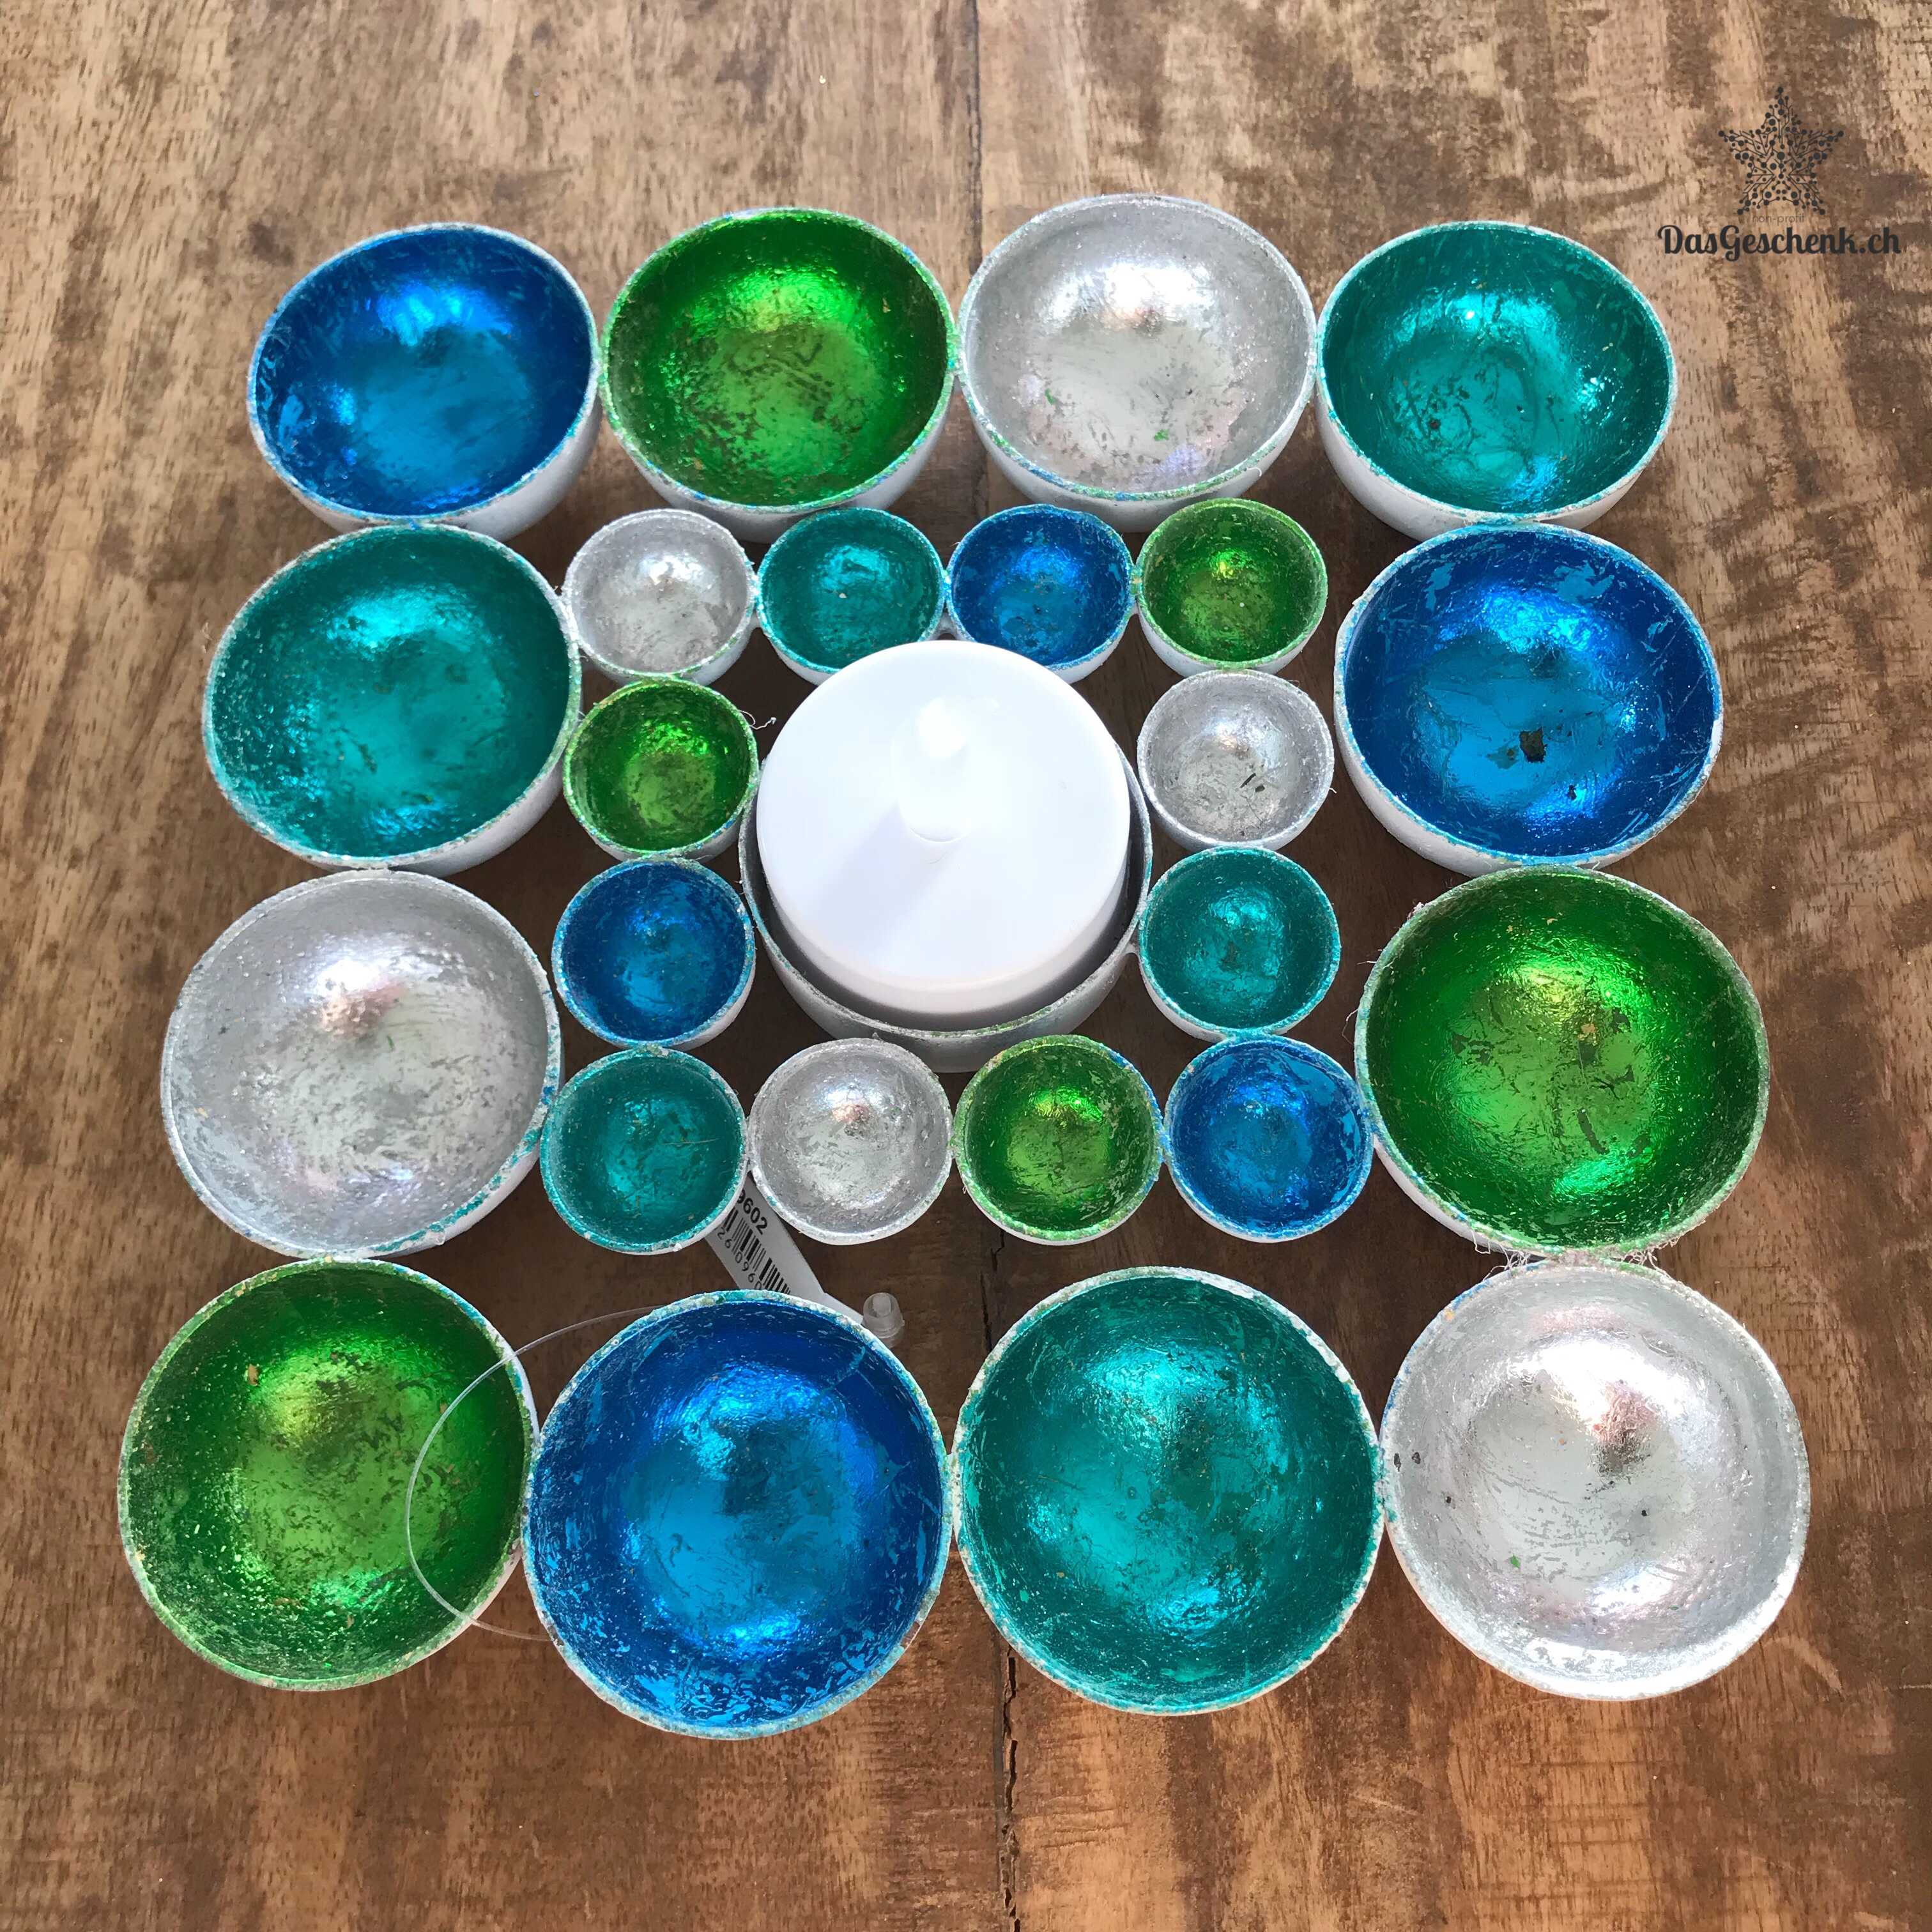 Teelichtständer in tollen Türkis/Blautönen